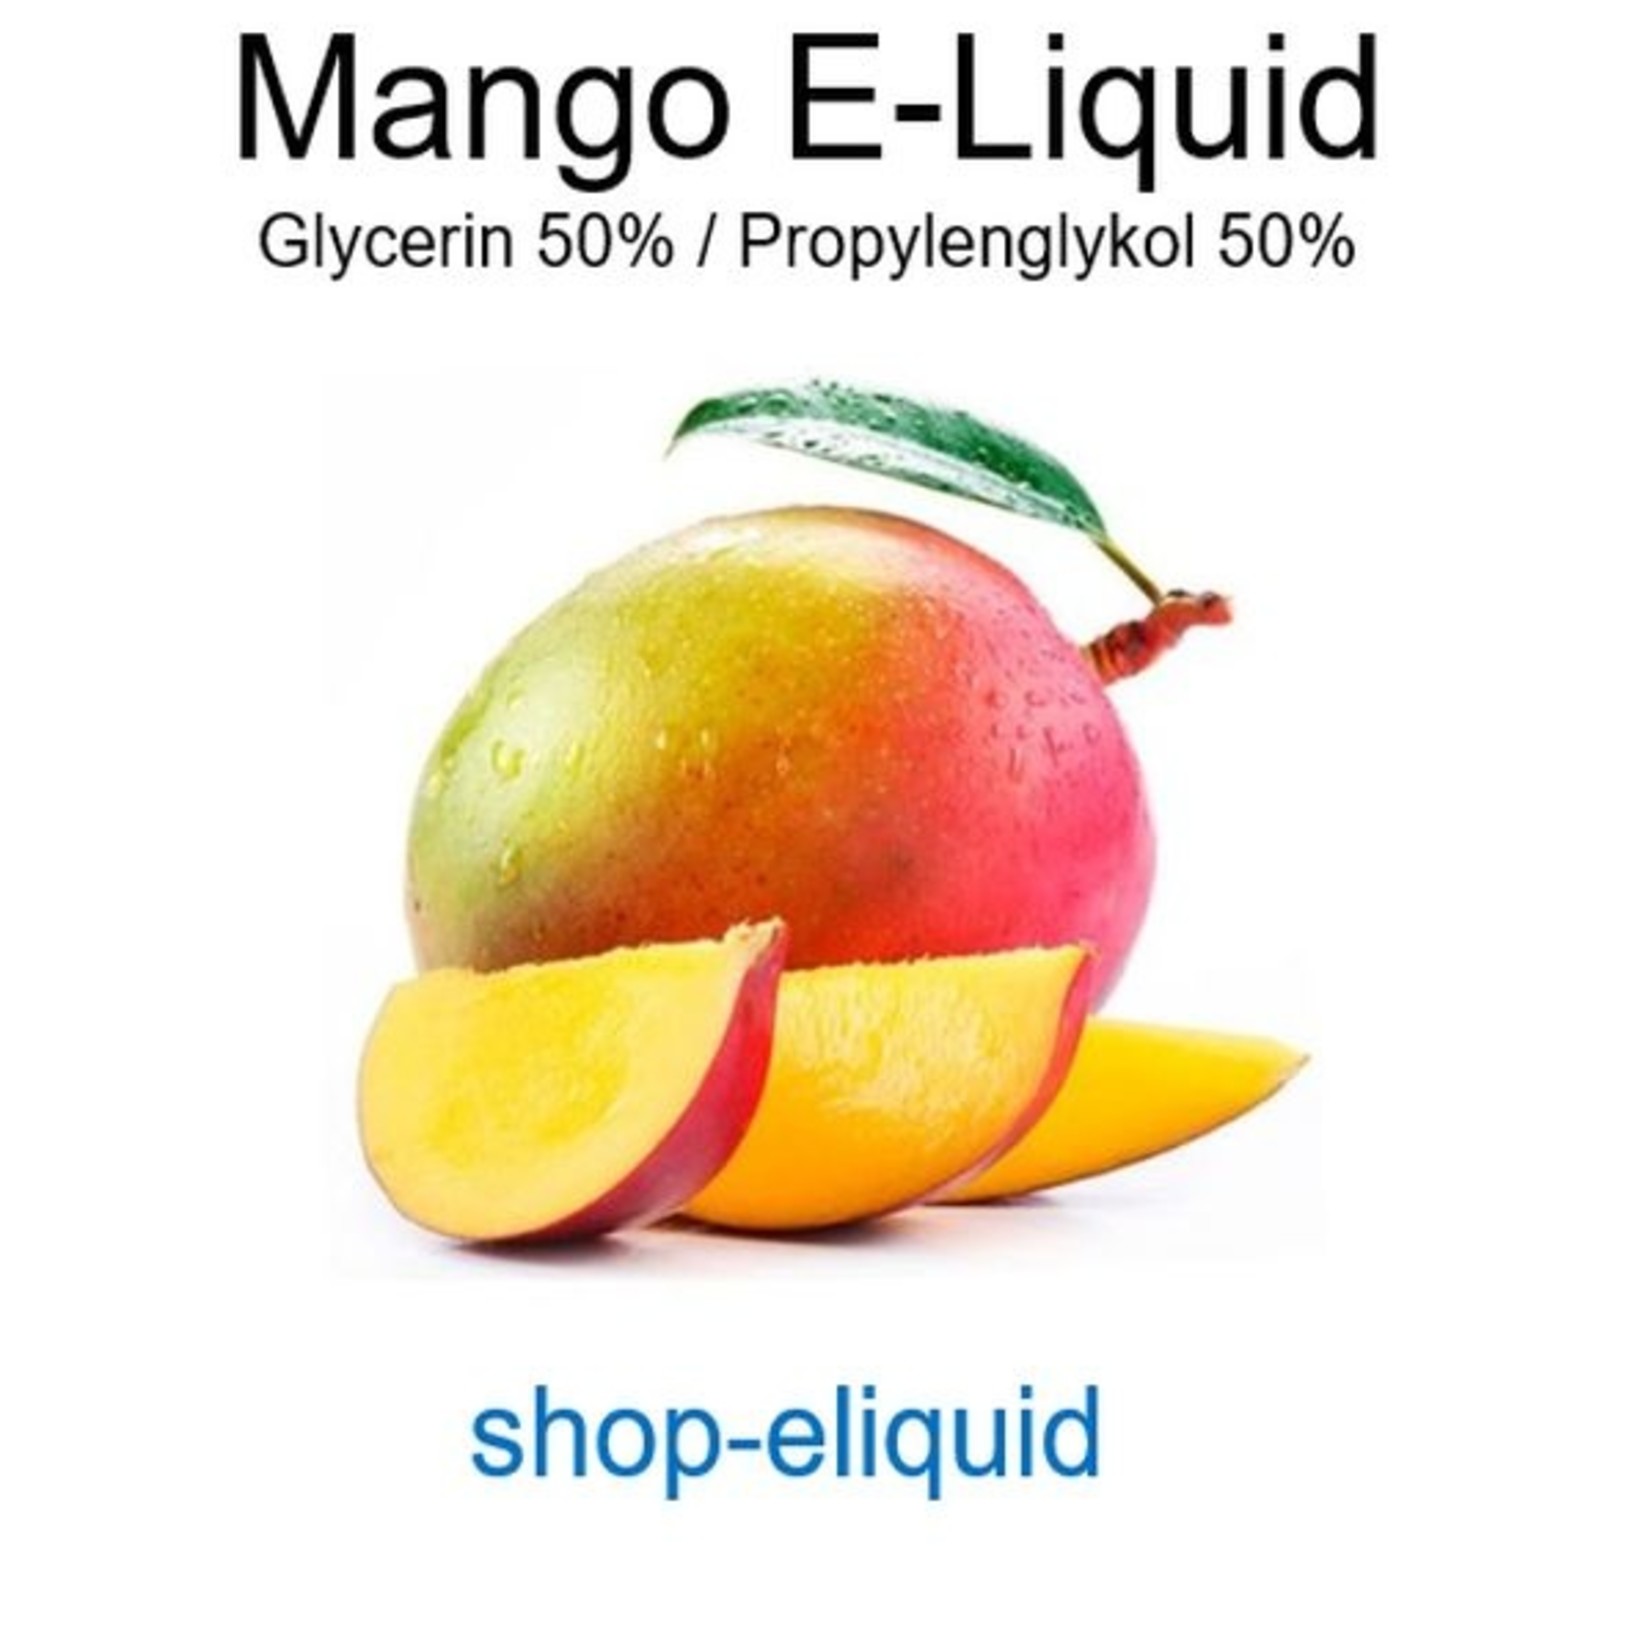 Mango E-Liquid